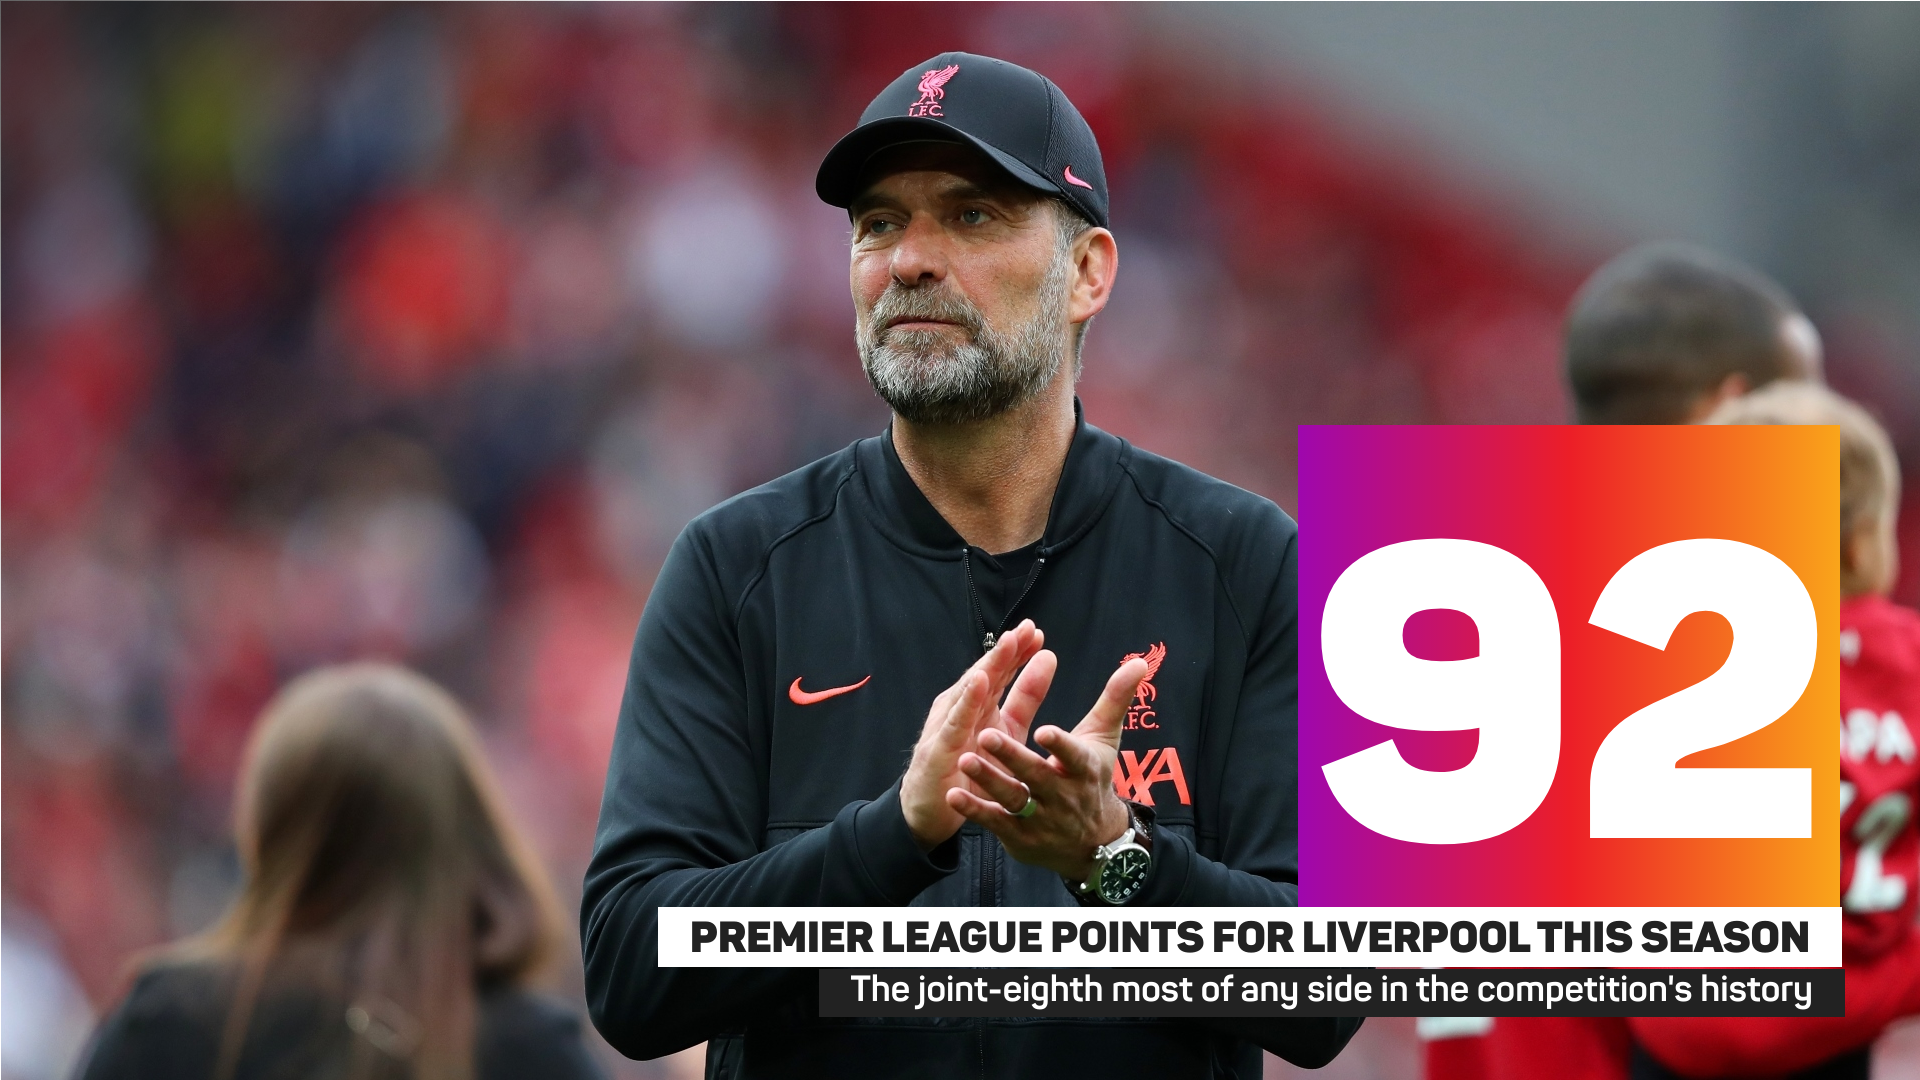 Liverpool accrued 92 points this season